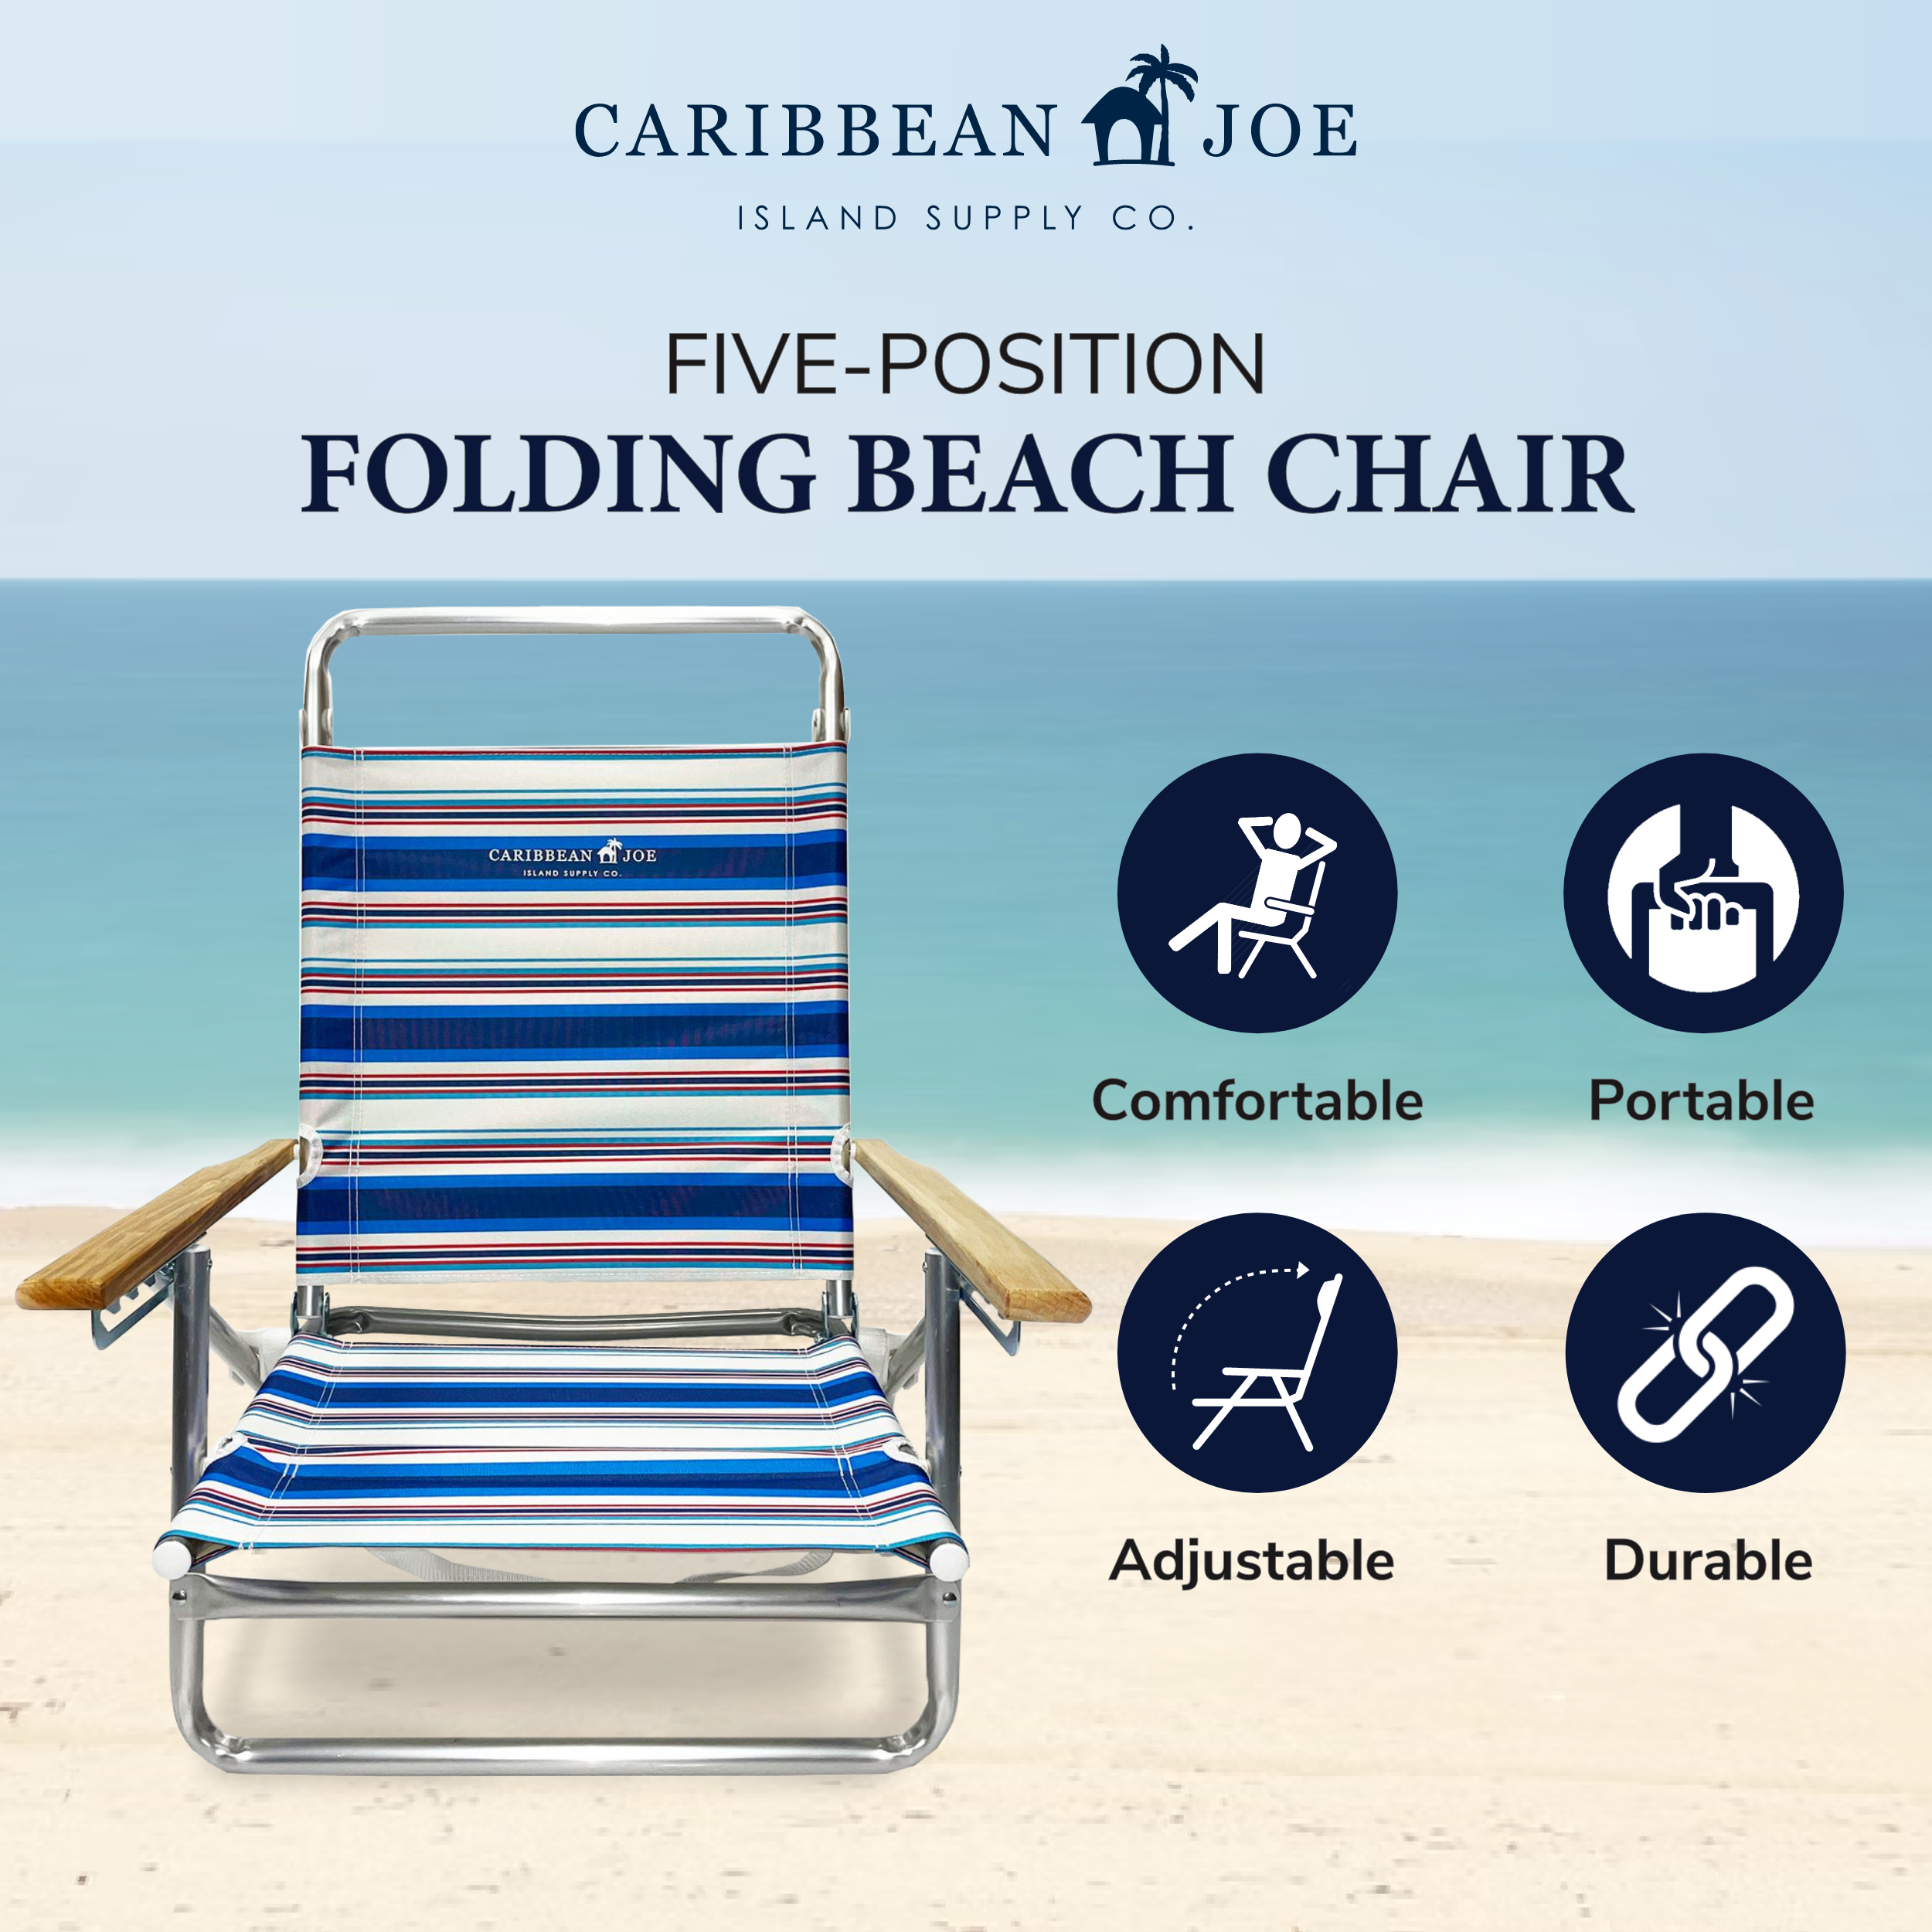 Caribbean Joe Five position folding beach chair - image 4 of 5